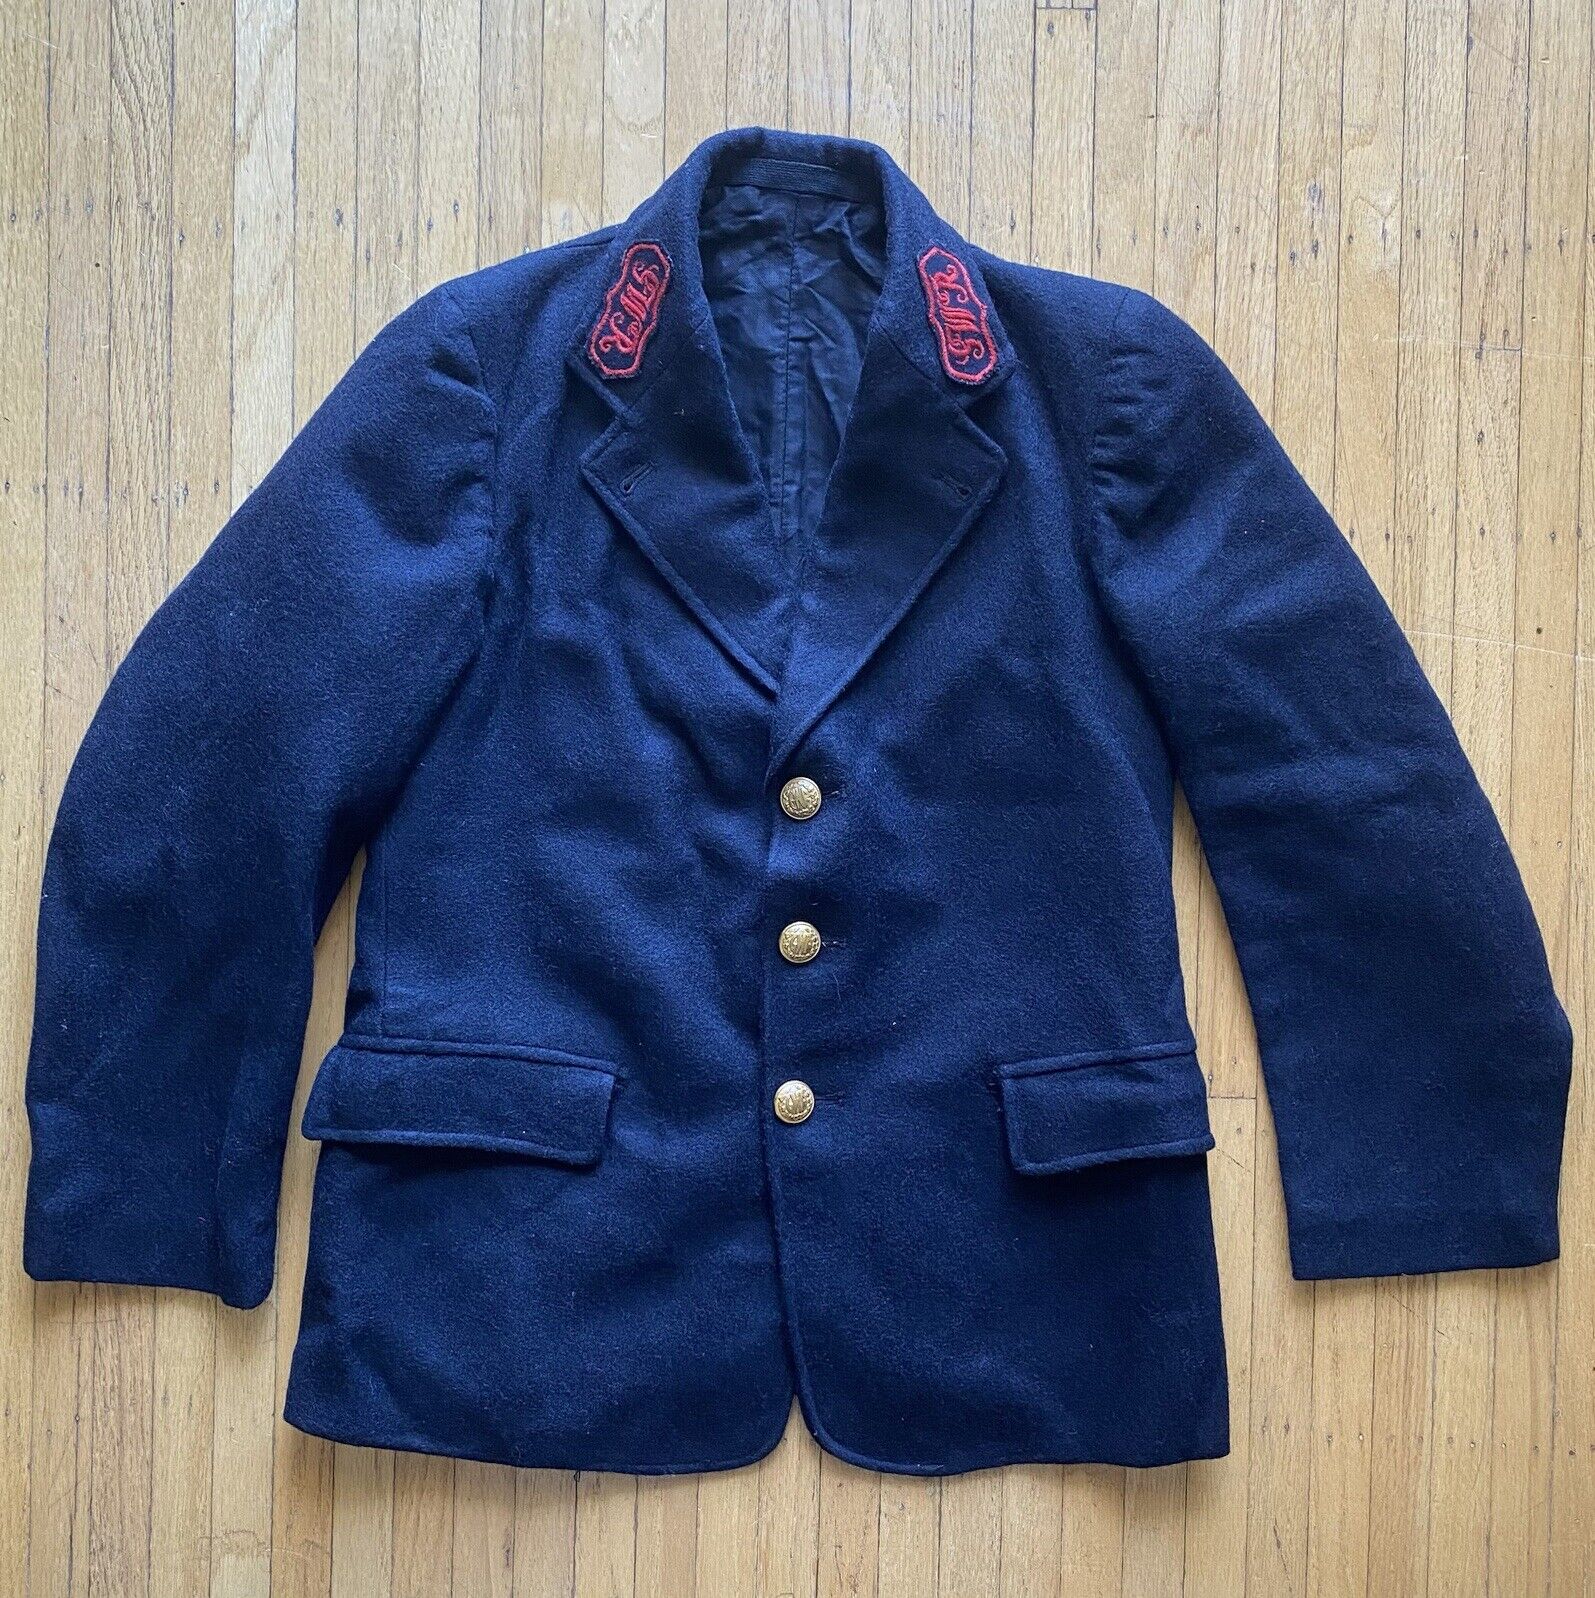 VTG Great Western Railway Conductors Uniform Jacket Dated 1953 Small